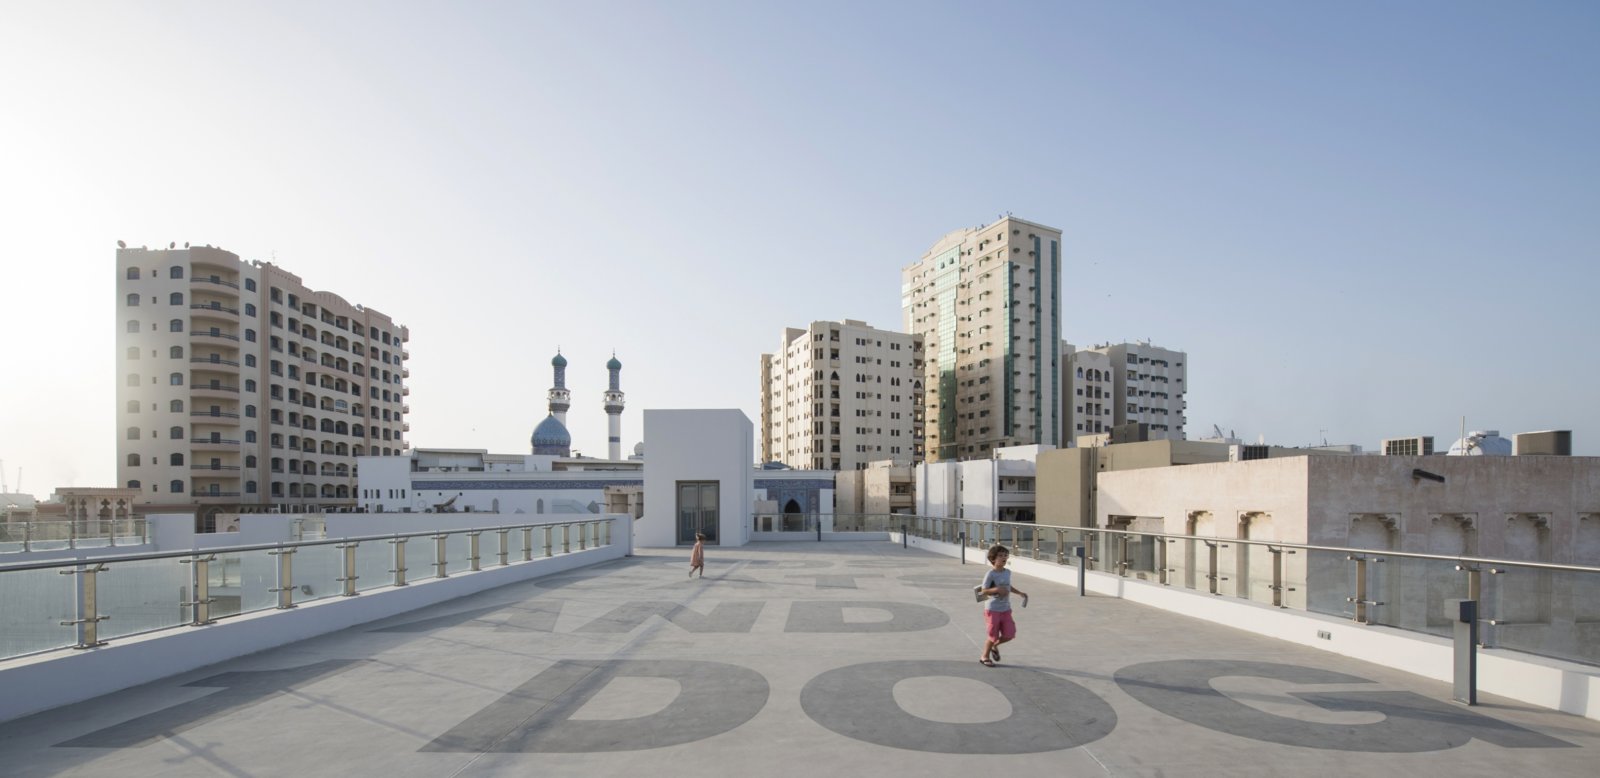 Abbas Akhavan, Kids, Cats and 1 Dog, 2016, paint on rooftop, 591 x 394 in. (1500 x 1000 cm). Installation view, Sharjah Biennial 13, Al Mureijah Square, Sharjah, UAE, 2017